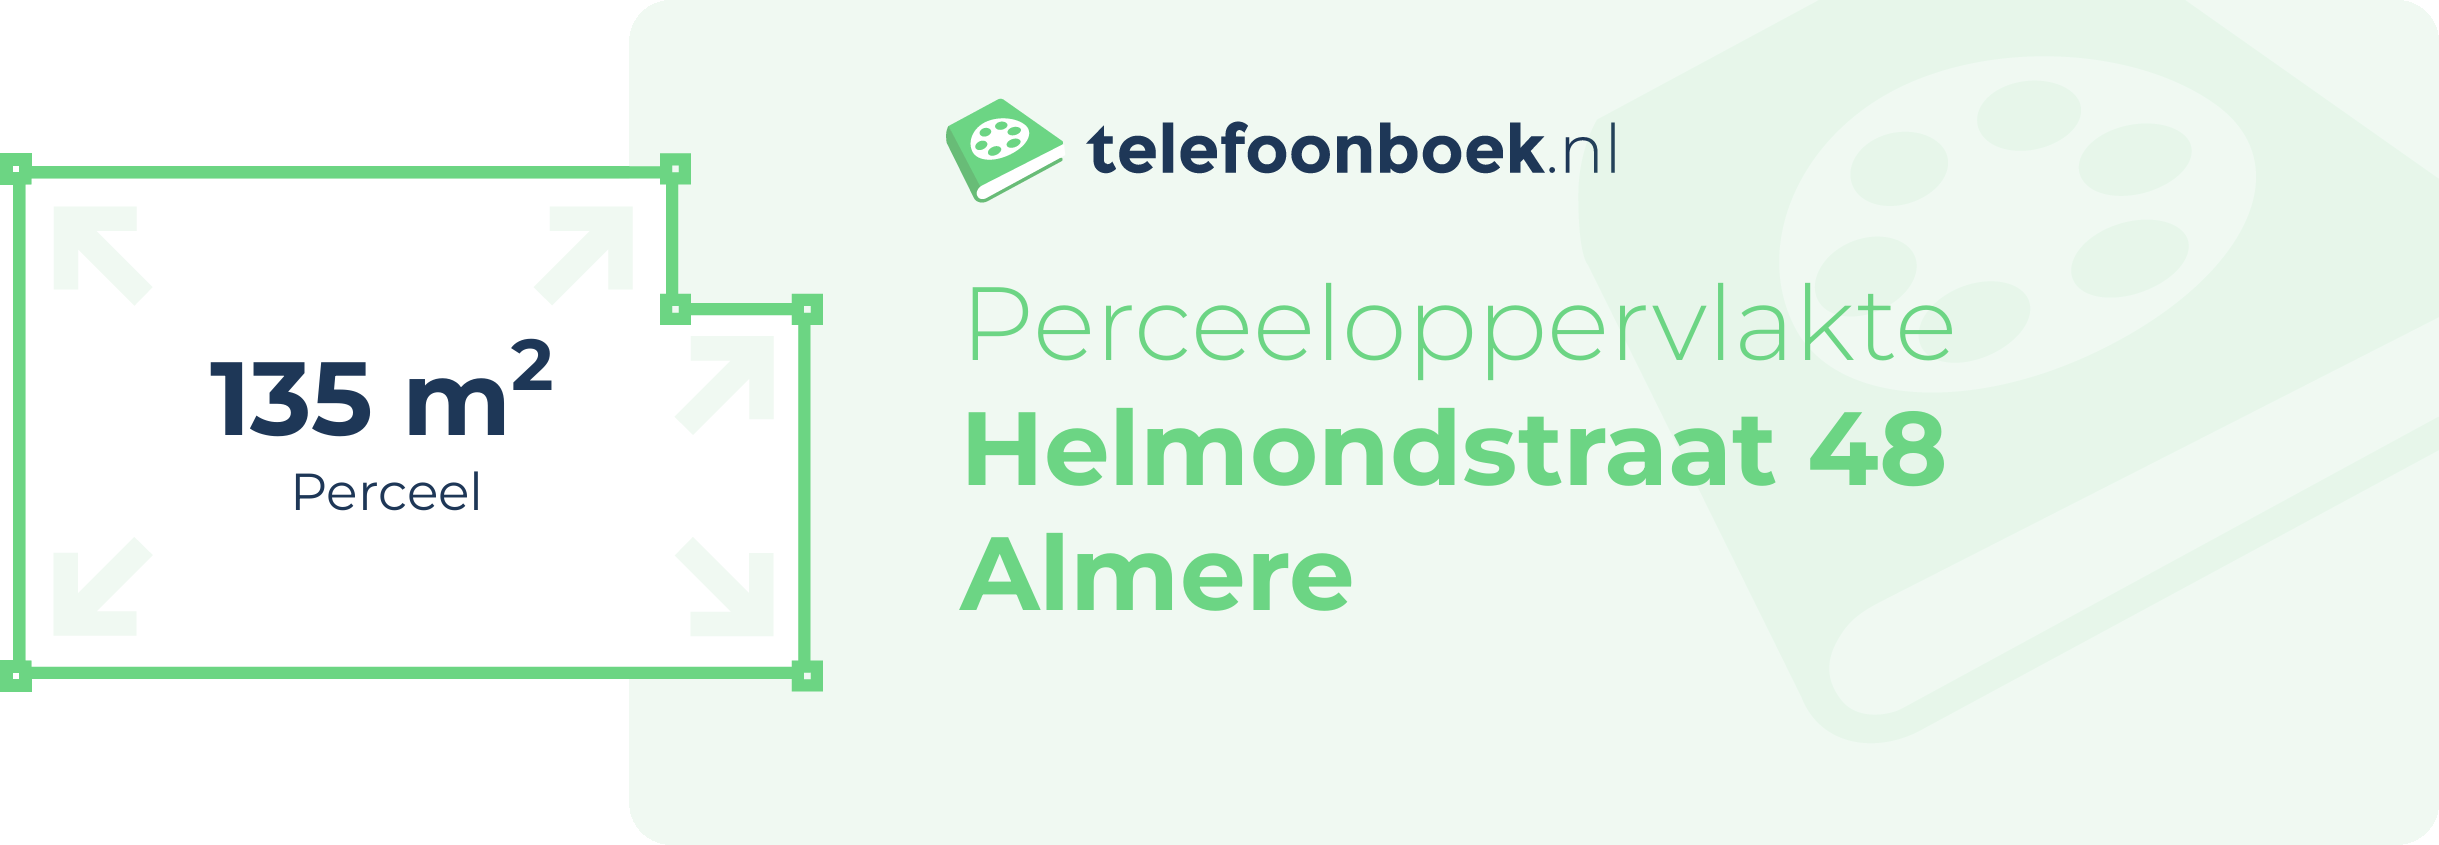 Perceeloppervlakte Helmondstraat 48 Almere